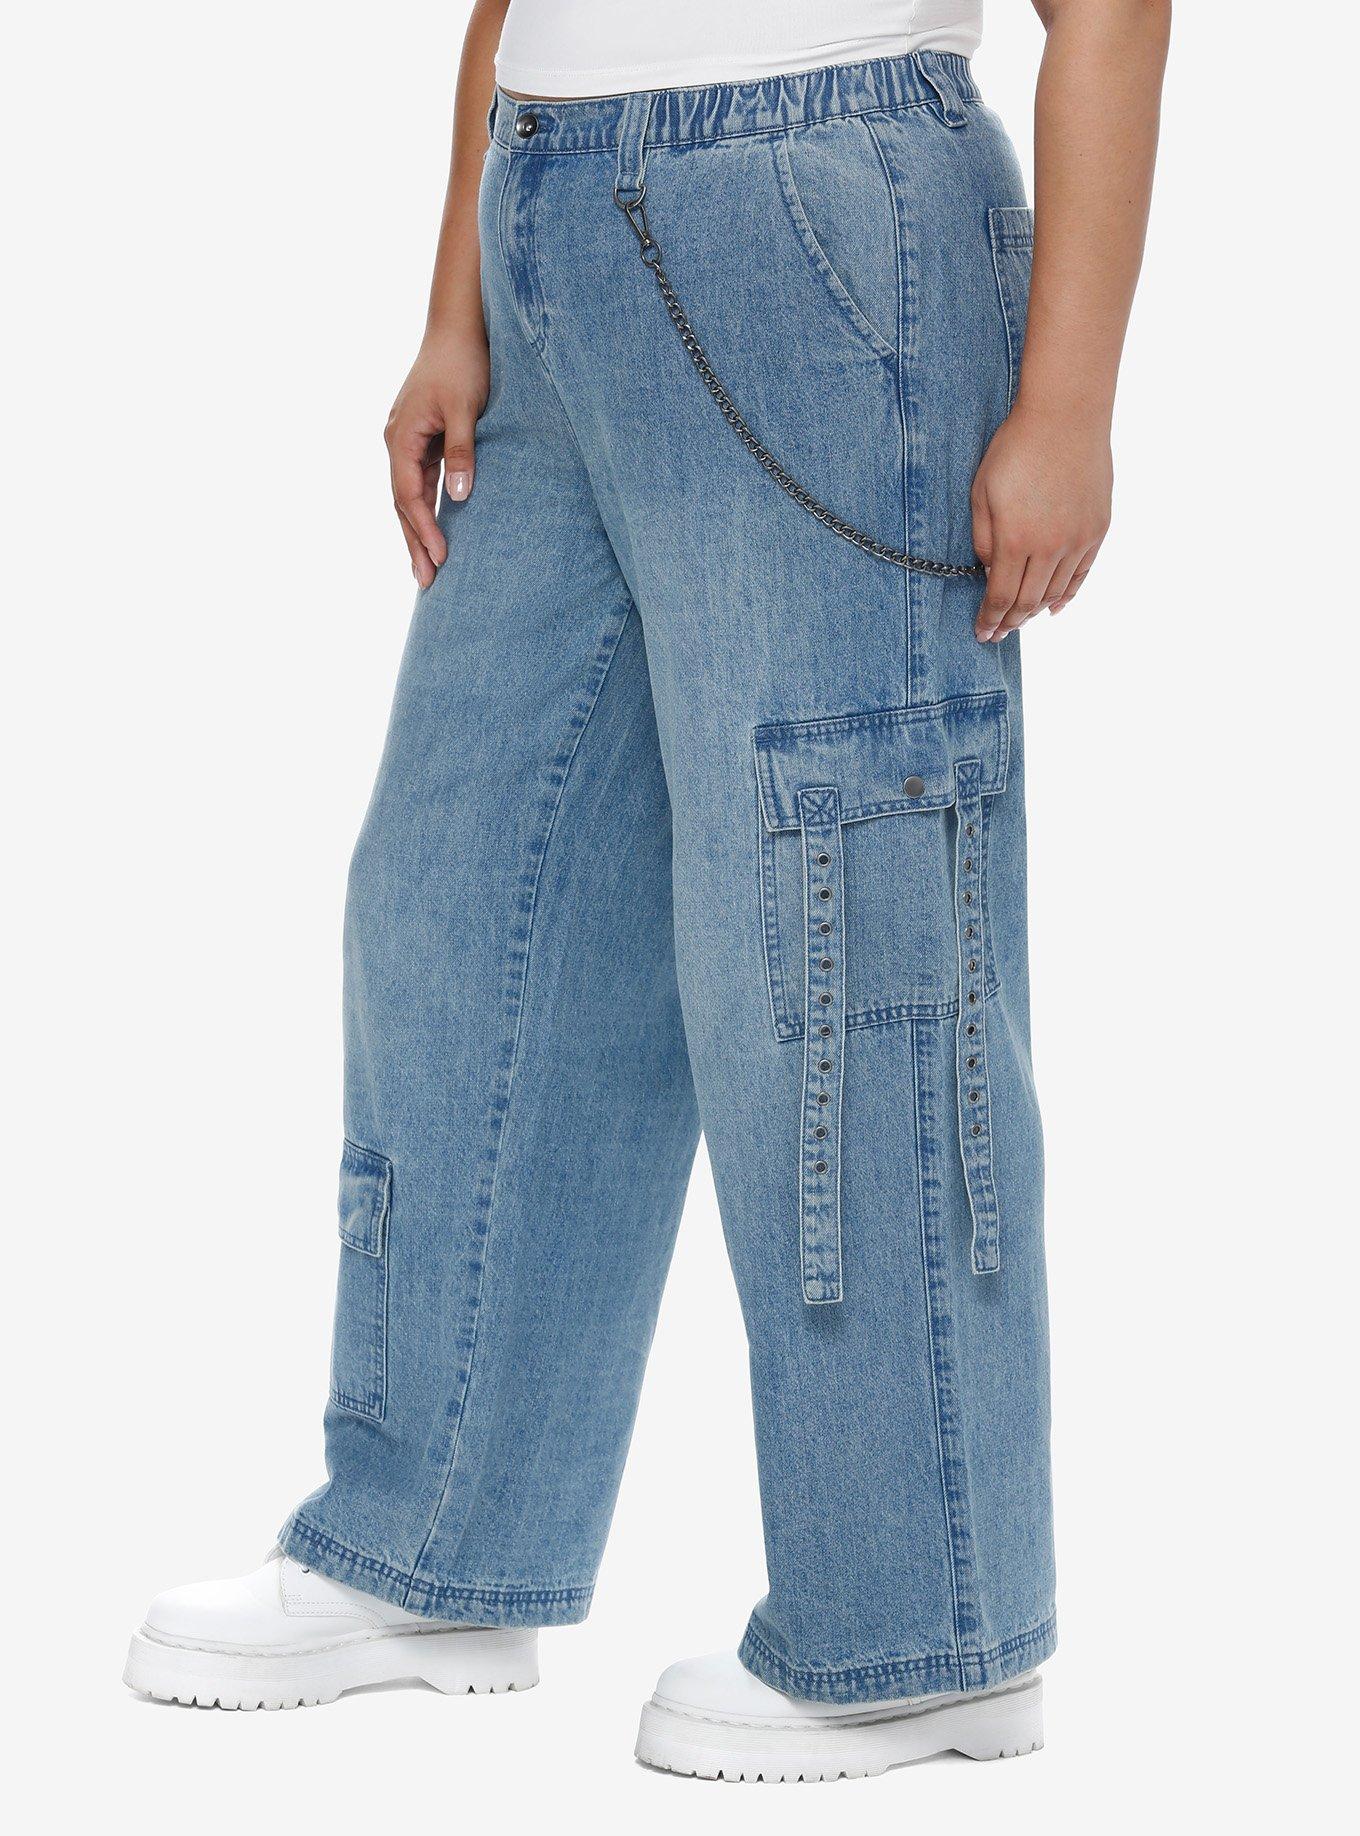 Indigo Cargo Carpenter Pants Plus Size, BLUE, alternate